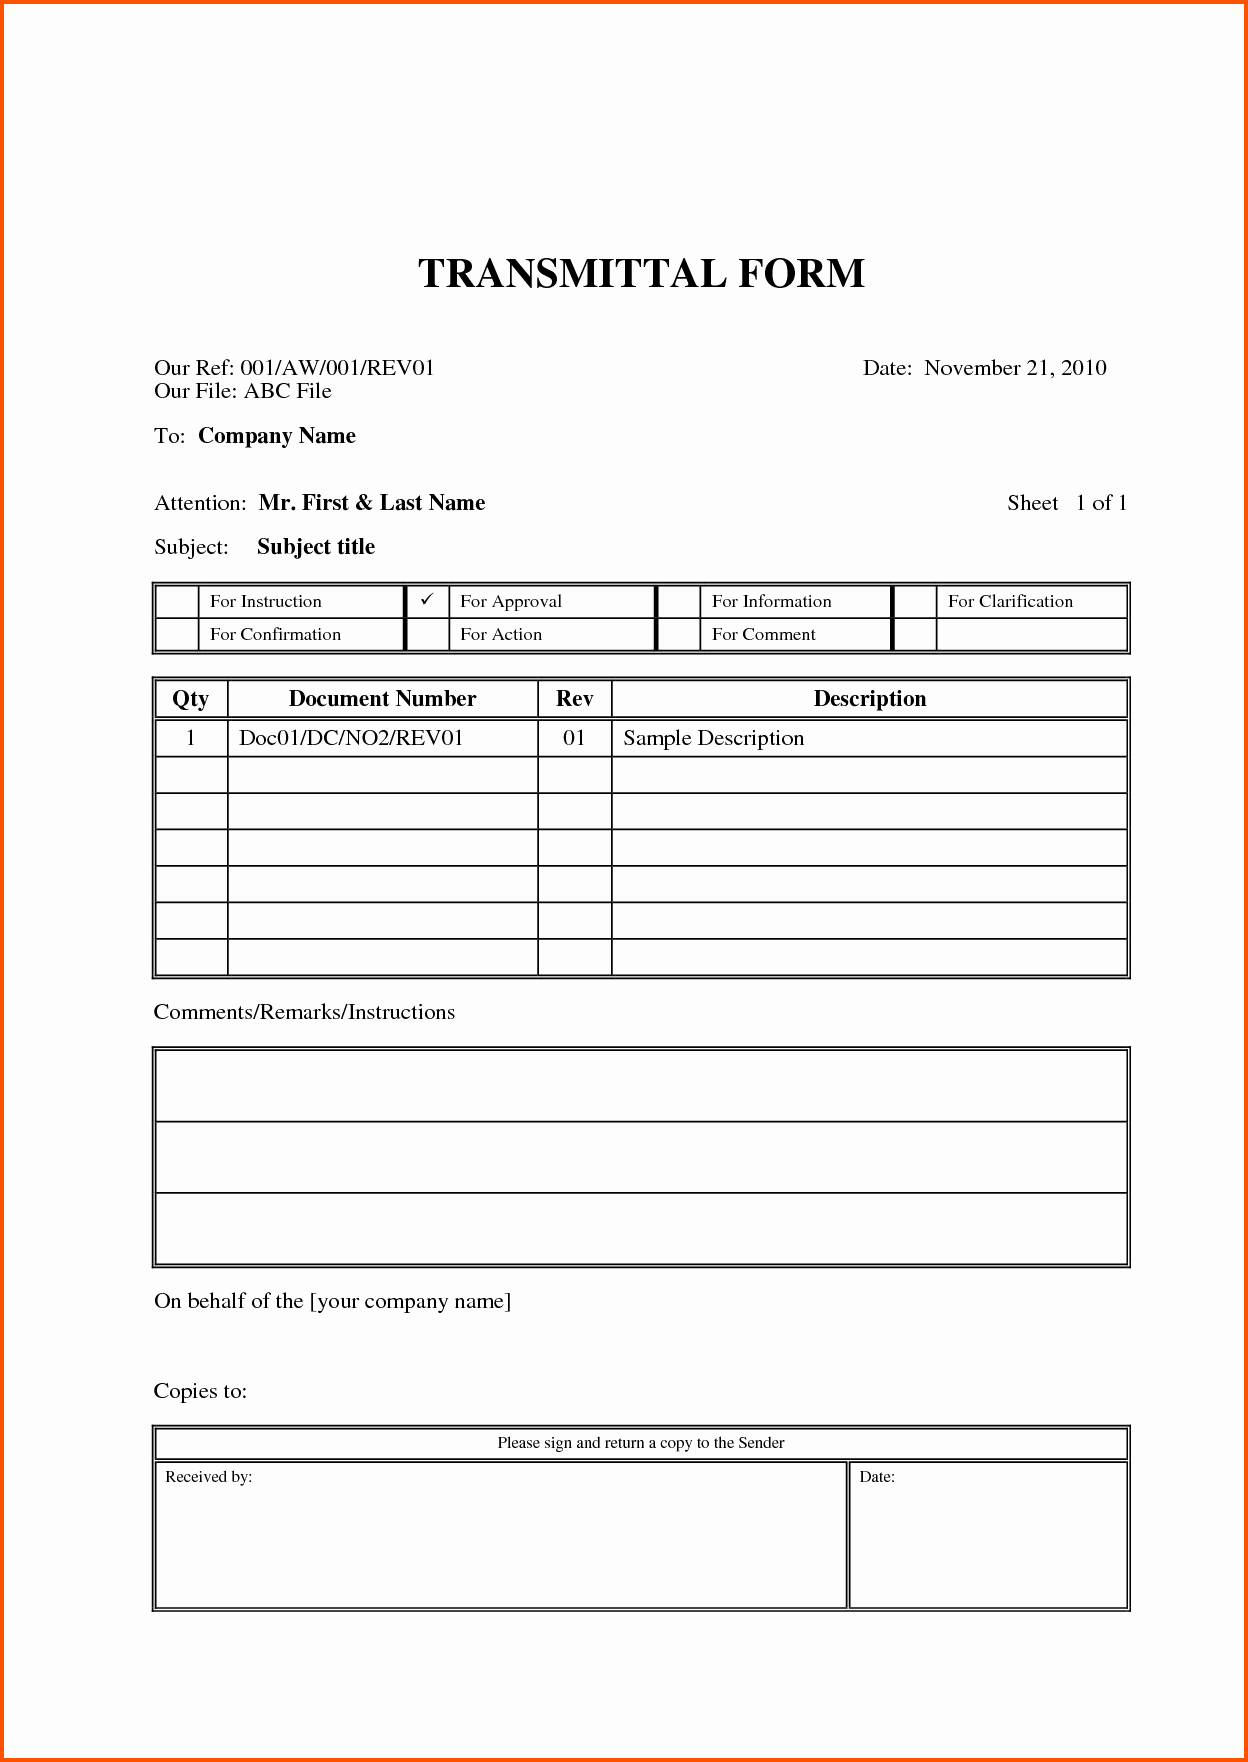 Letter Of Transmittal Template Doc - Transmittal form Sample Template New Construction Transmittal Letter